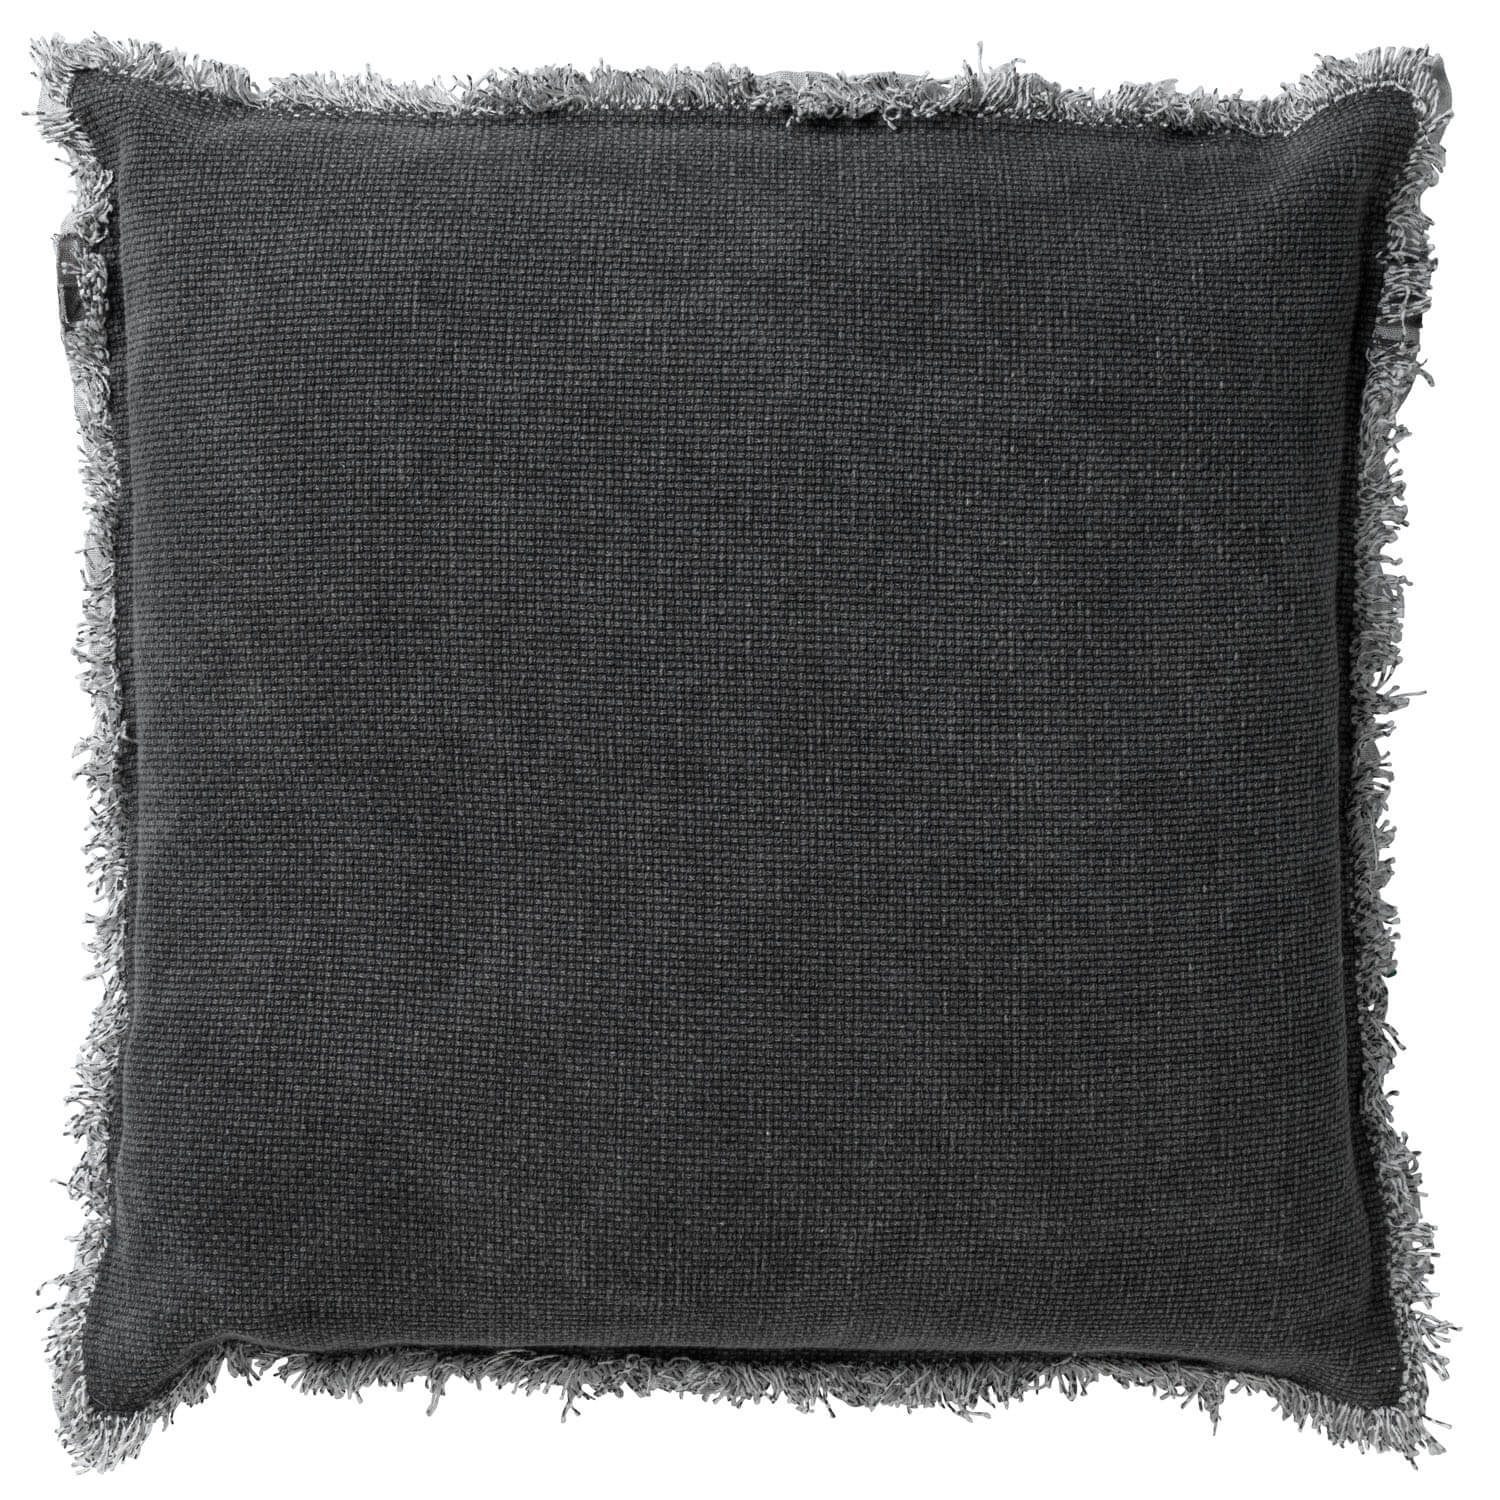 BURTO - Cushion 60x60 cm Charcoal Gray - anthracite